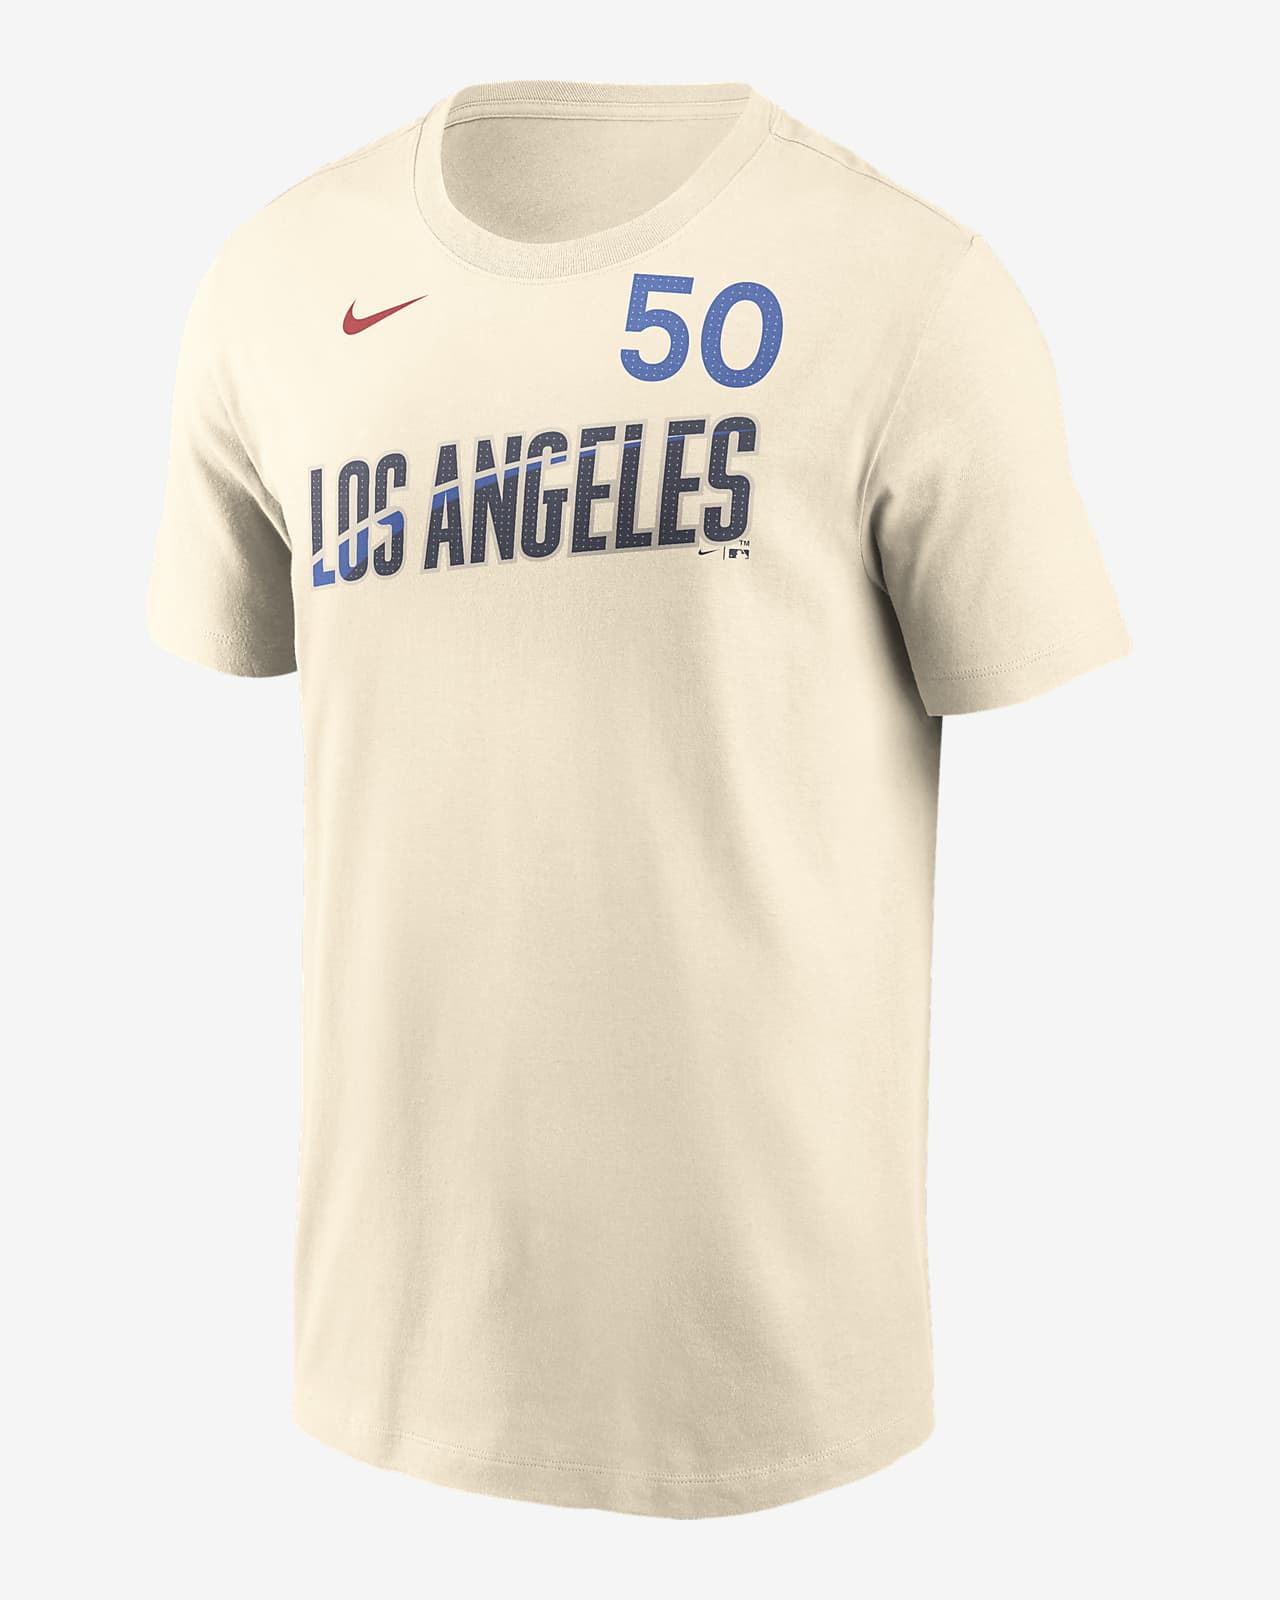 Playera Nike de la MLB para hombre Mookie Betts Los Angeles Dodgers City Connect Fuse